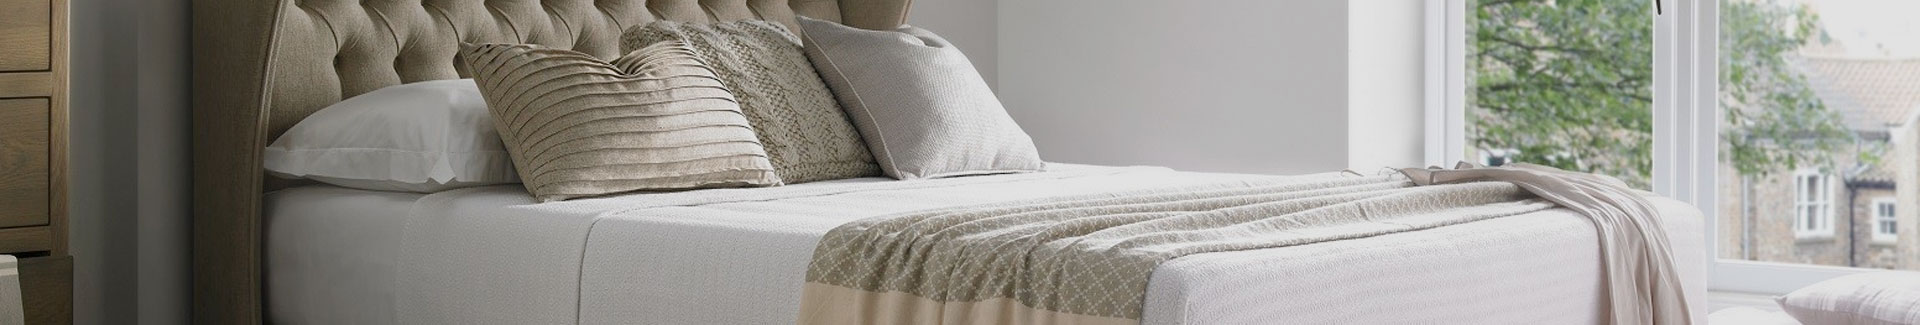 Lakeland Carpets Bed Range